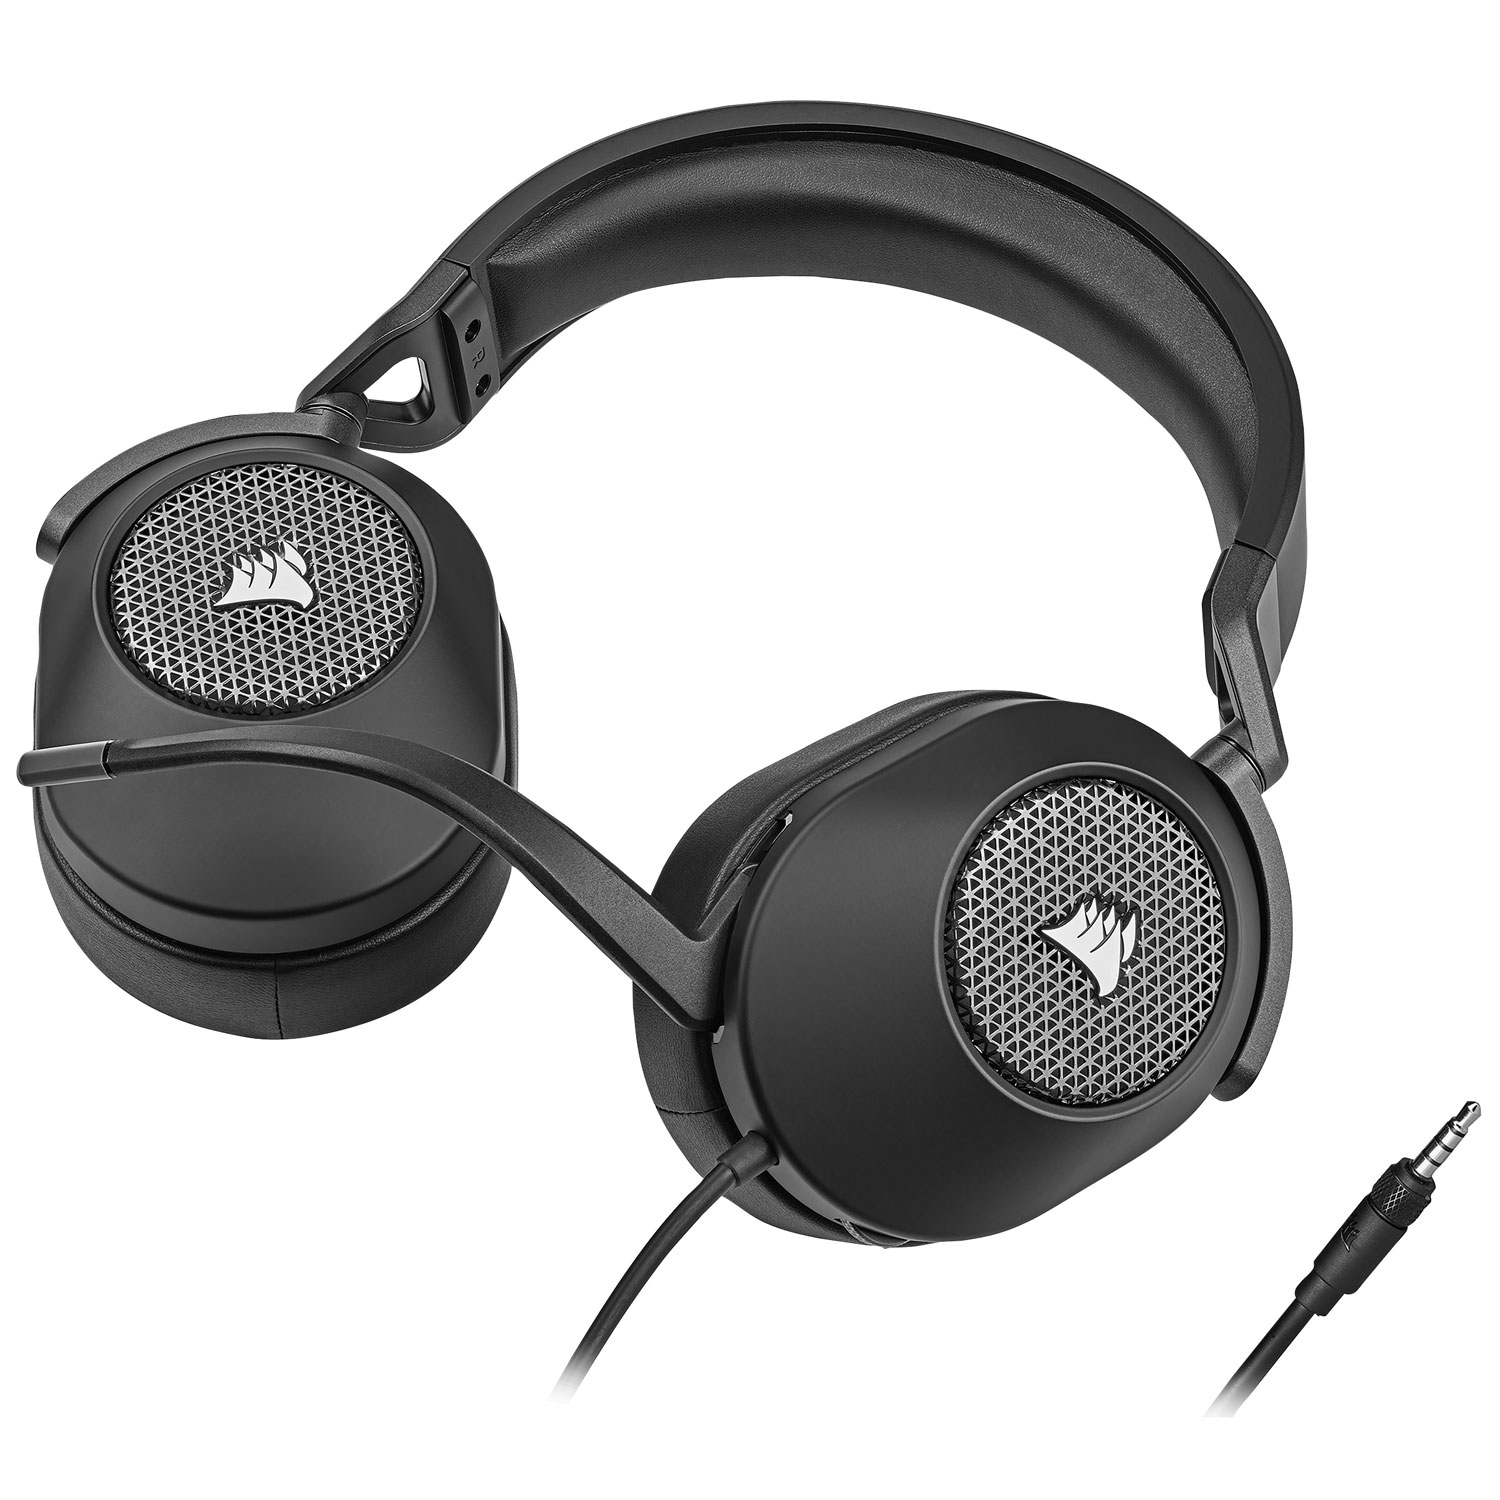 Corsair HS65 Surround Gaming Headset - Black | Best Buy Canada